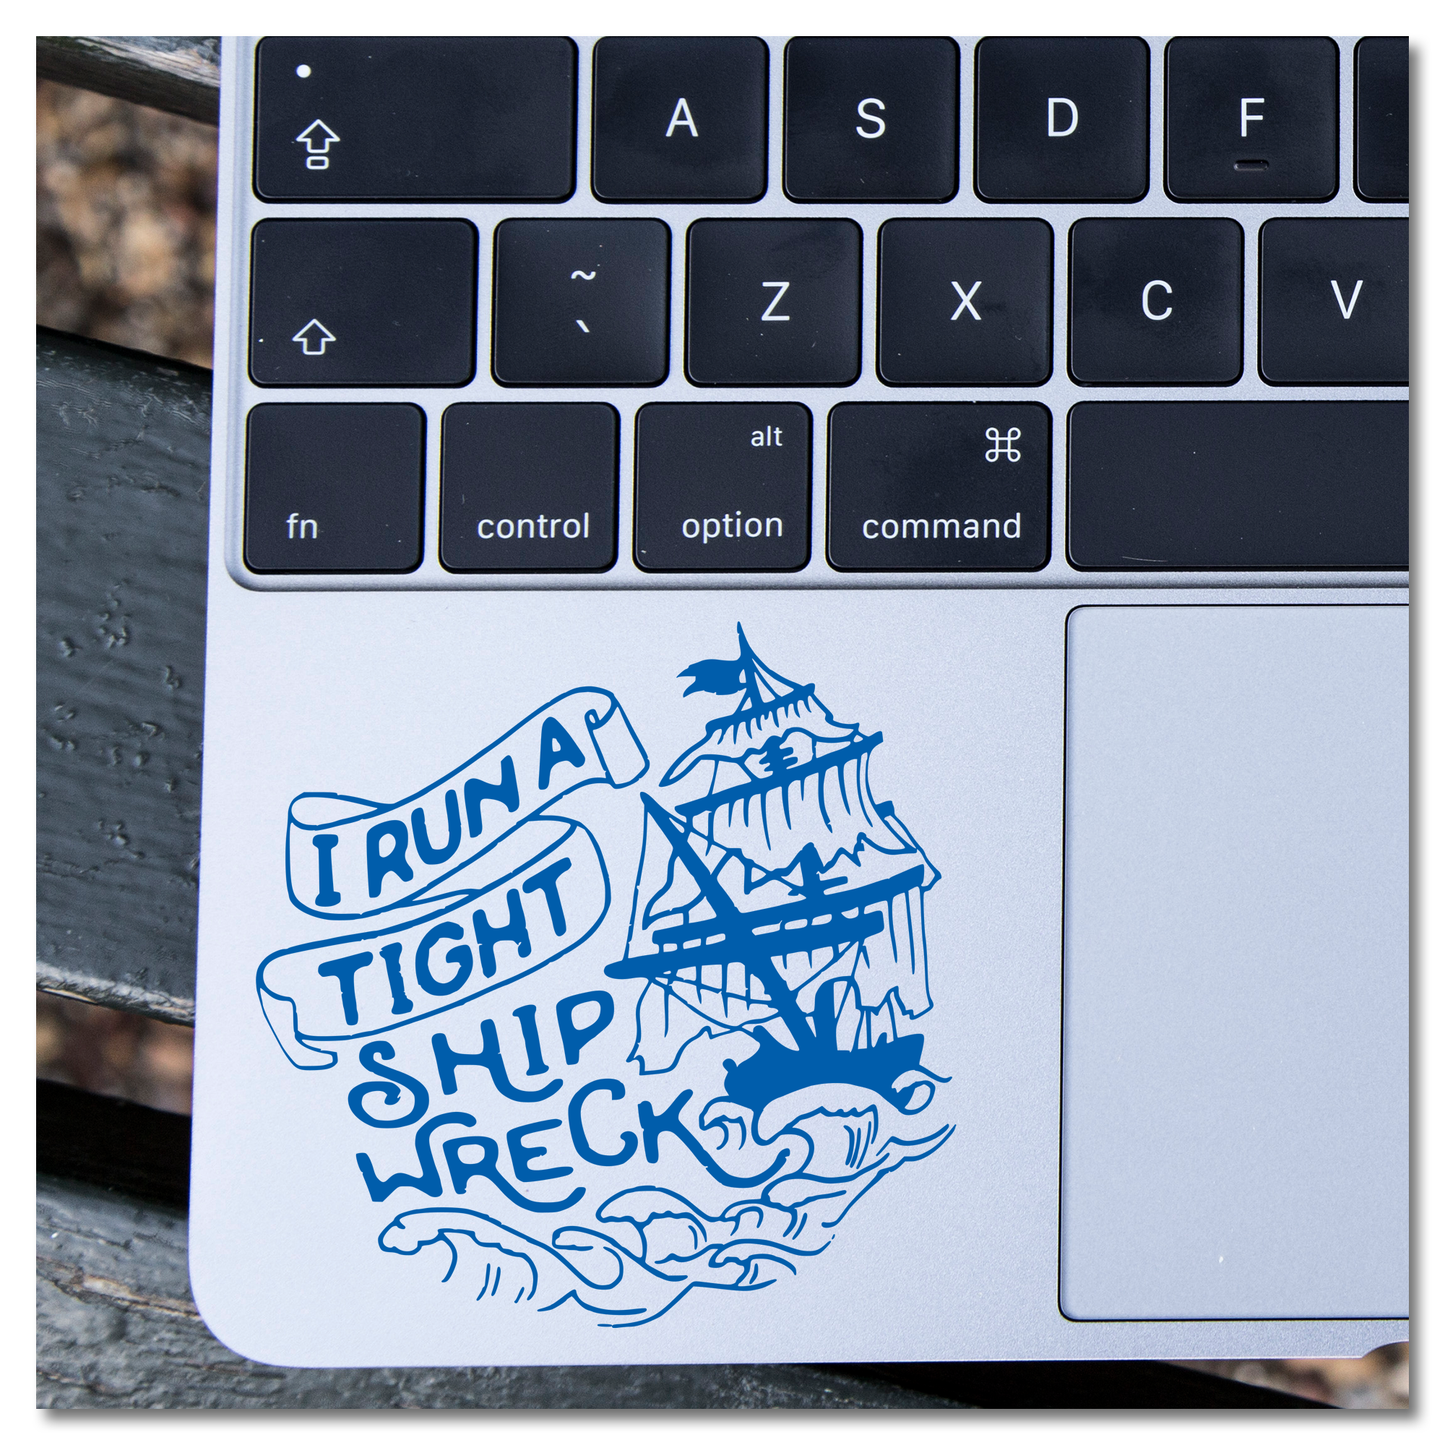 I Run A Tight Shipwreck Vinyl Decal Sticker